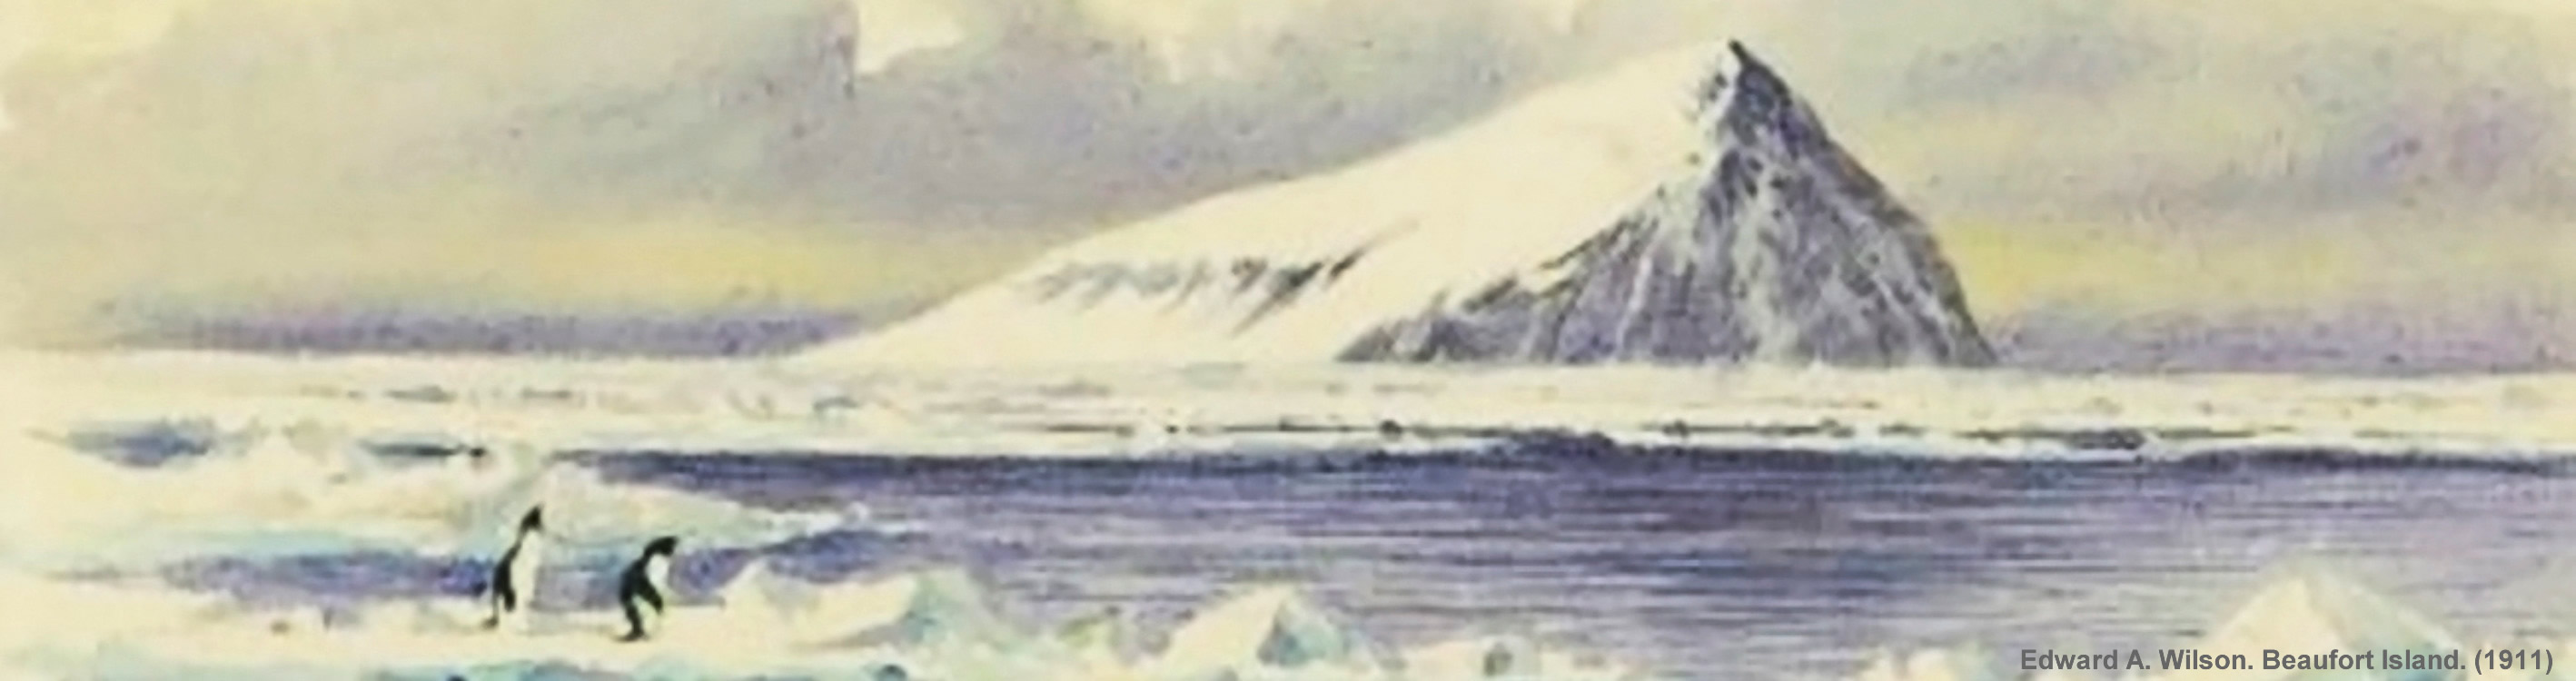 Edward A. Wilson. Beaufort Island. Ross Sea, Antarctica. 04. Januar 1911.